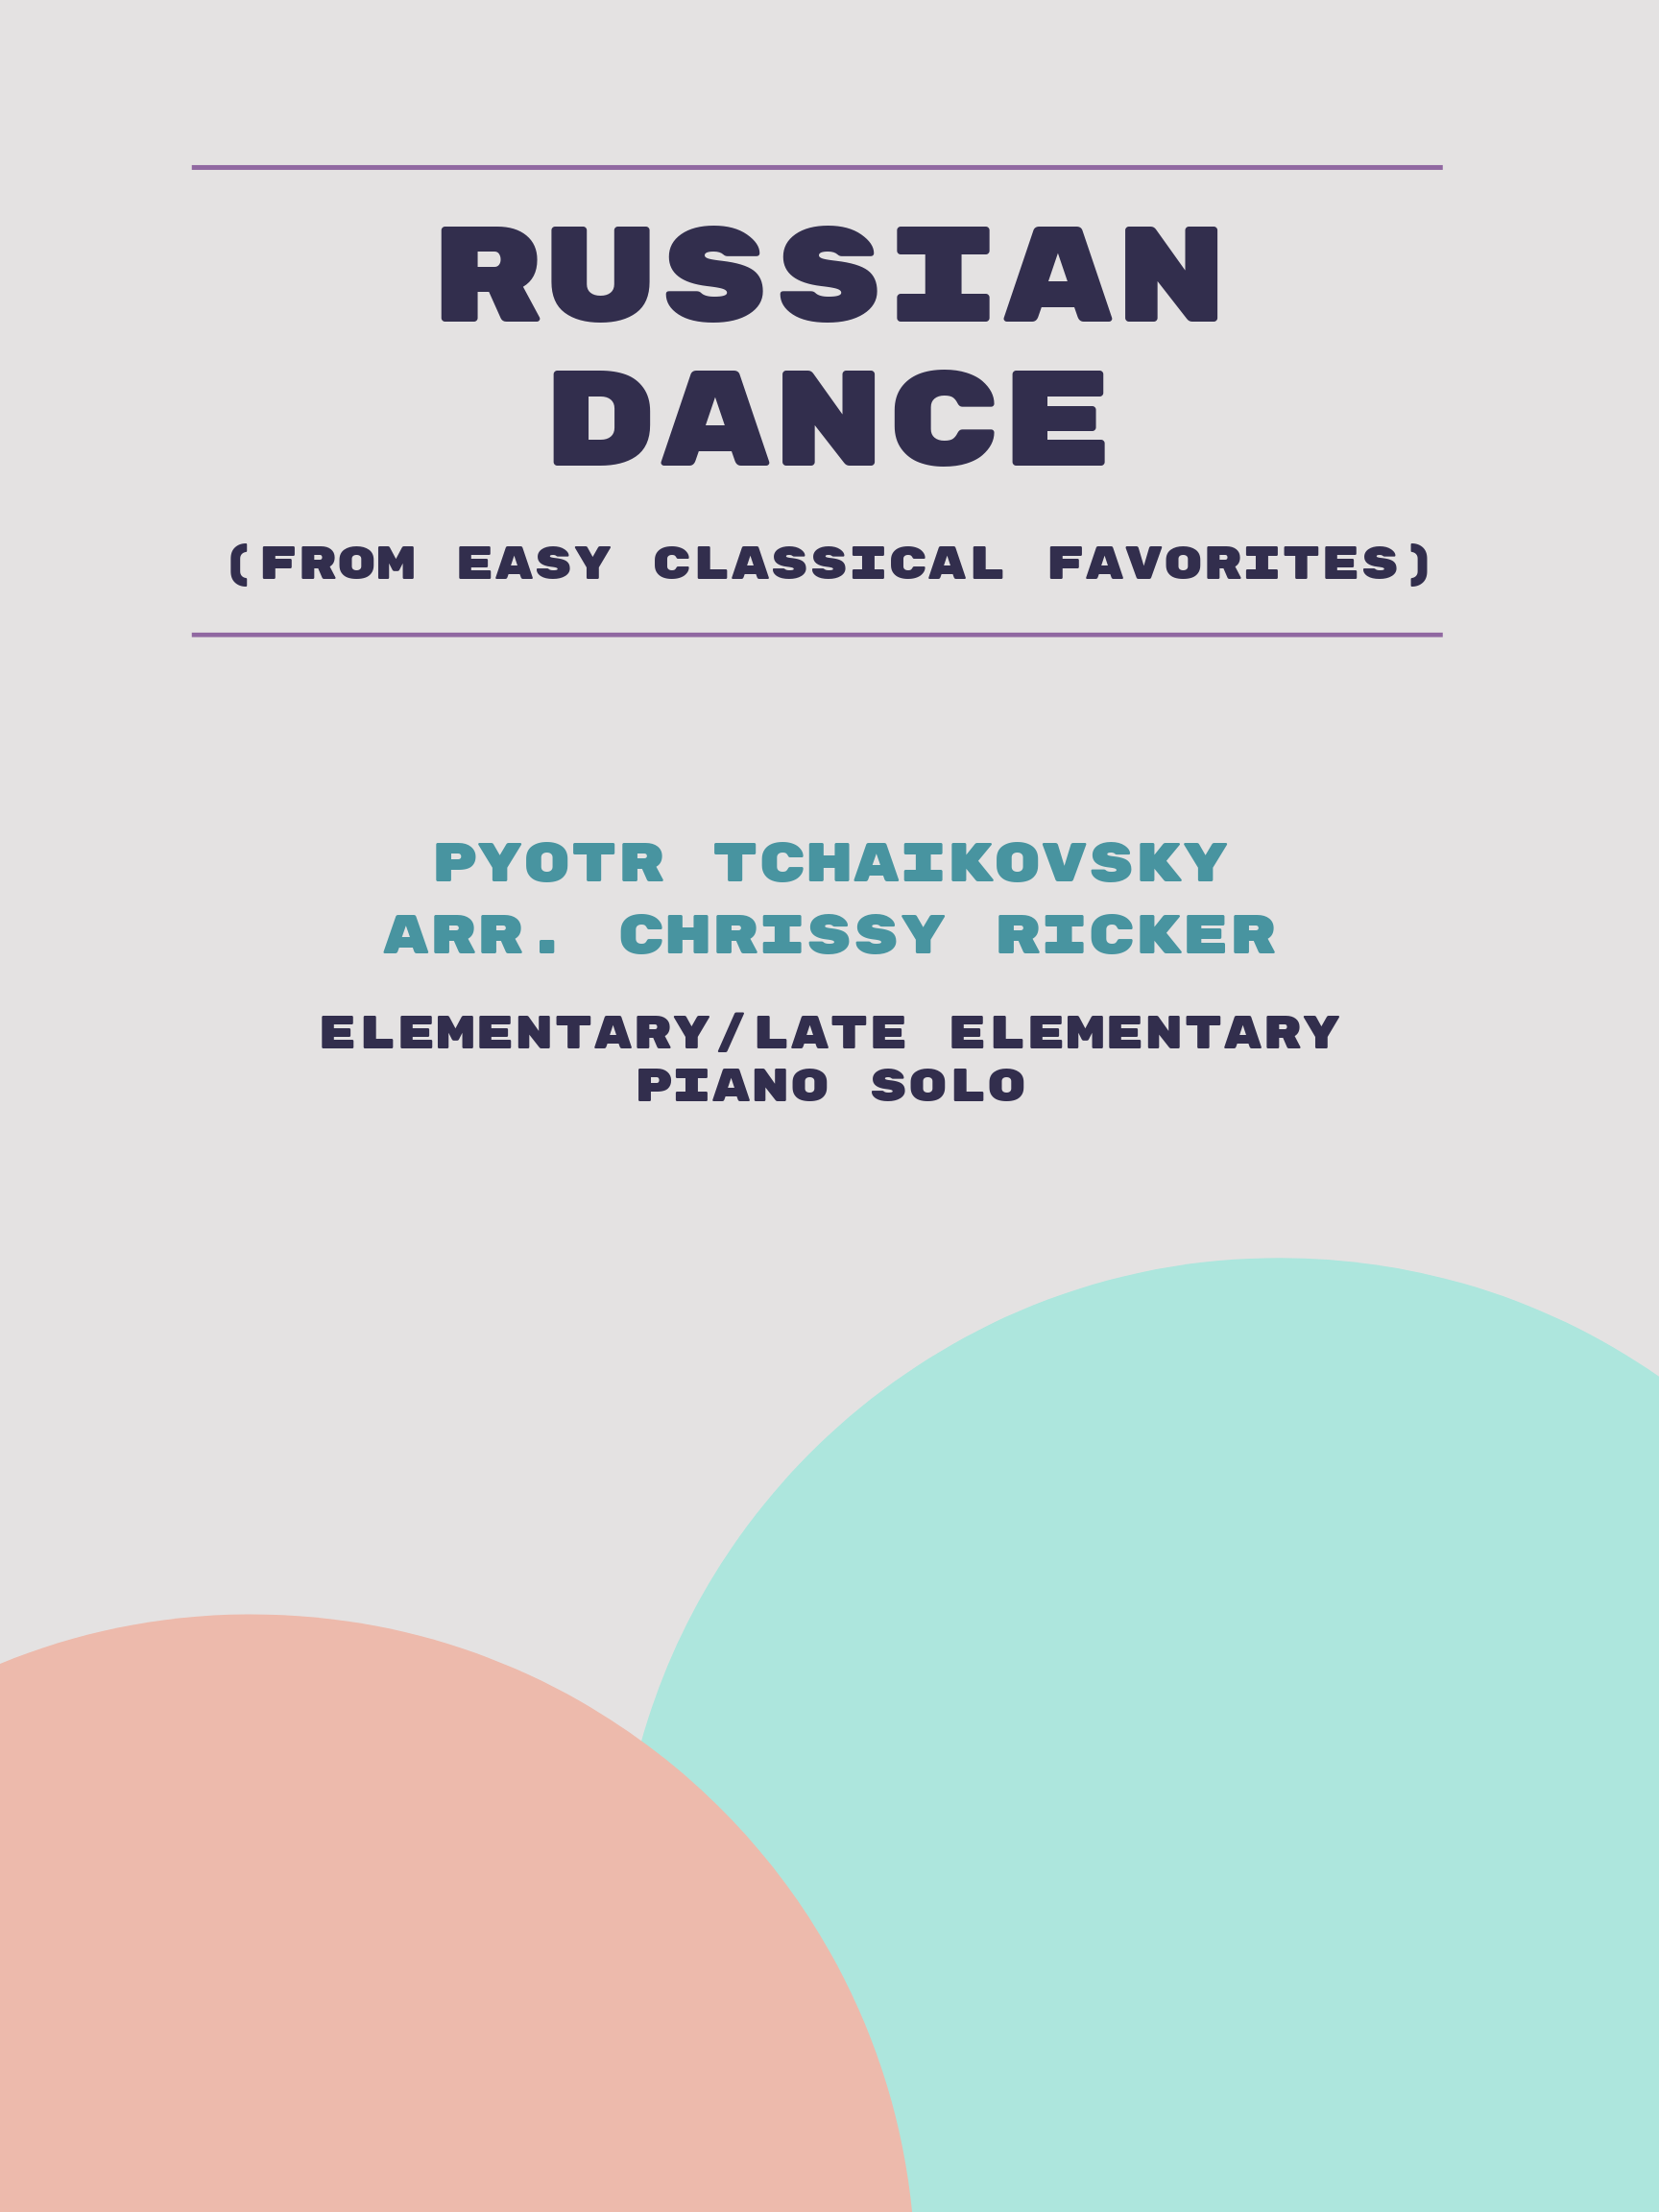 Russian Dance by Pyotr Tchaikovsky